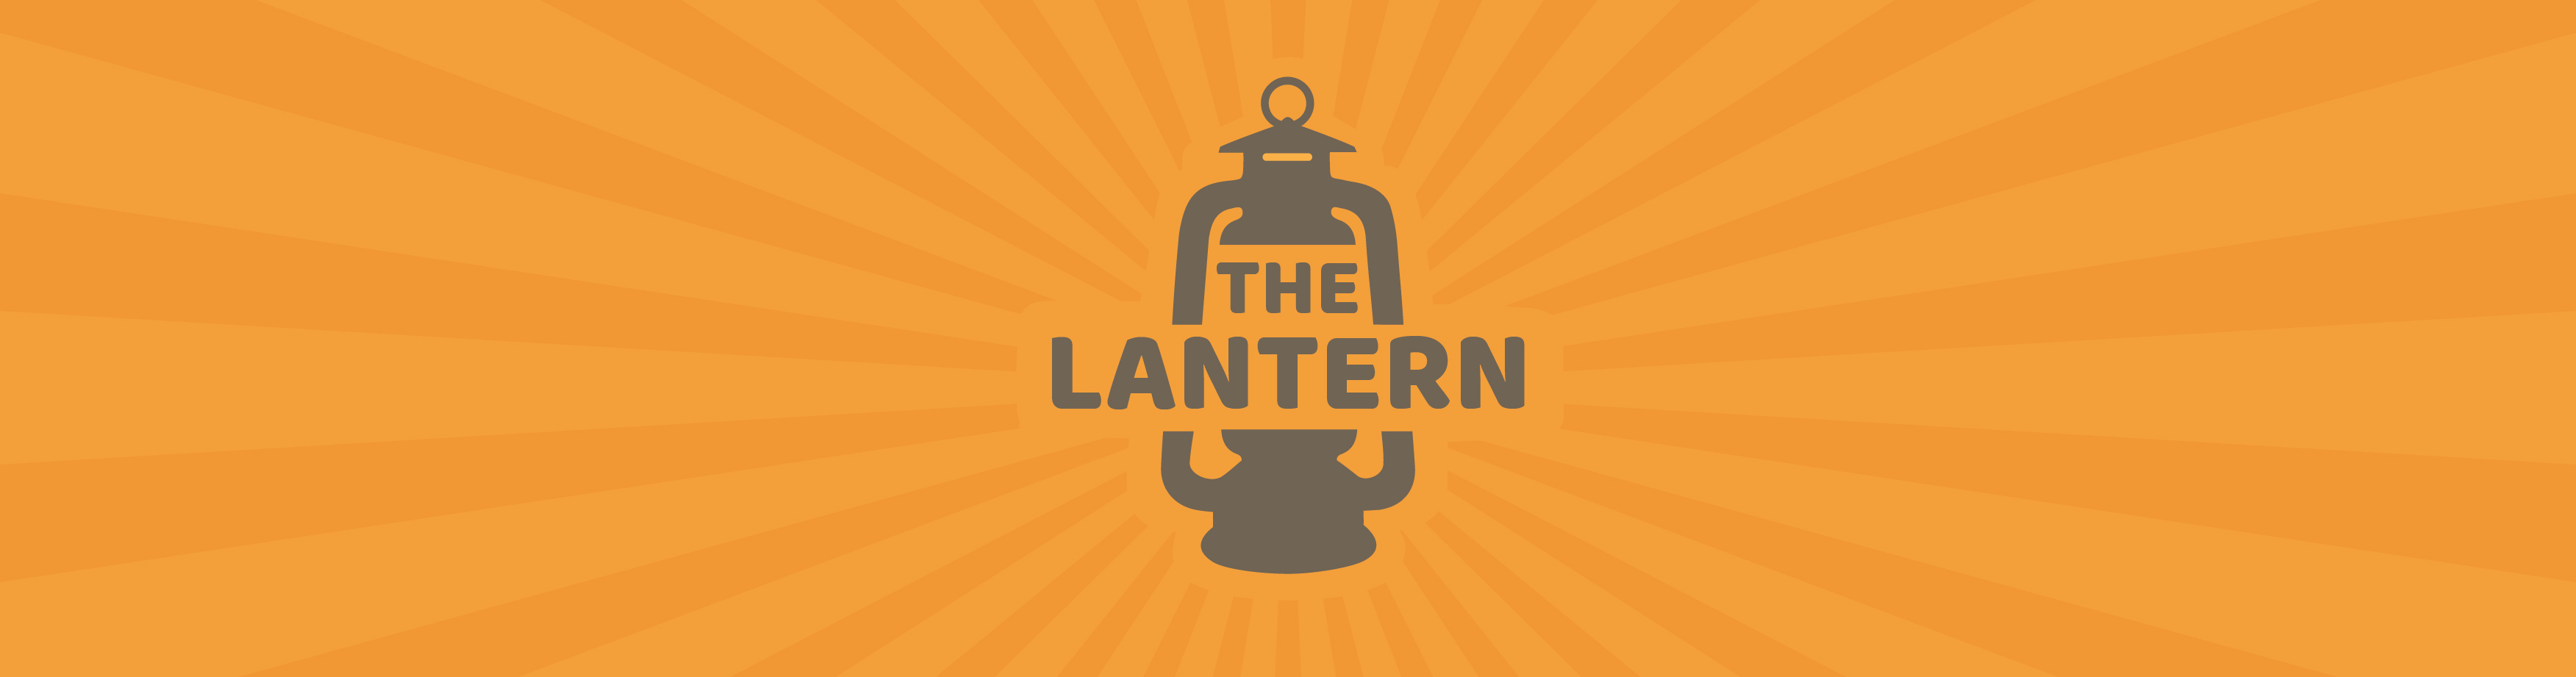 The Lantern - Web Header-03